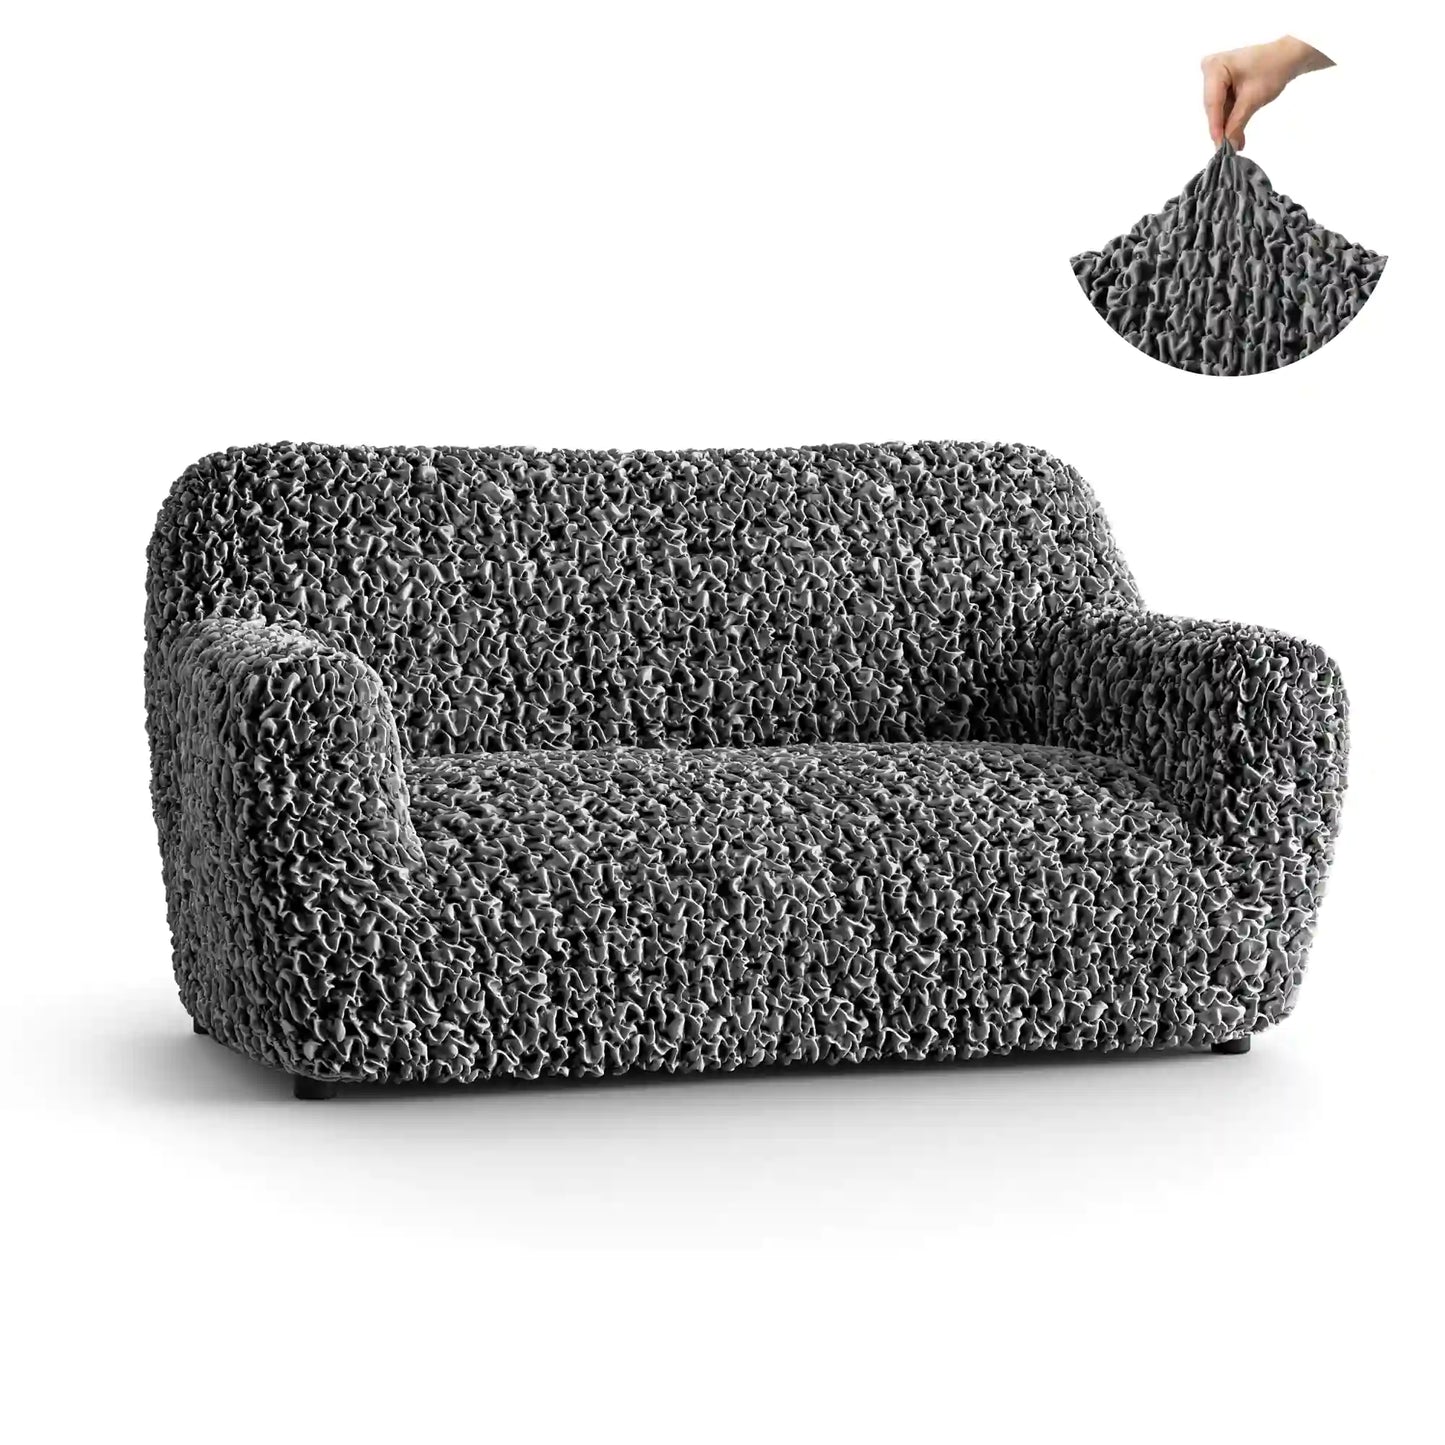 2 Seater Sofa Cover - Grey, Fuco Velvet